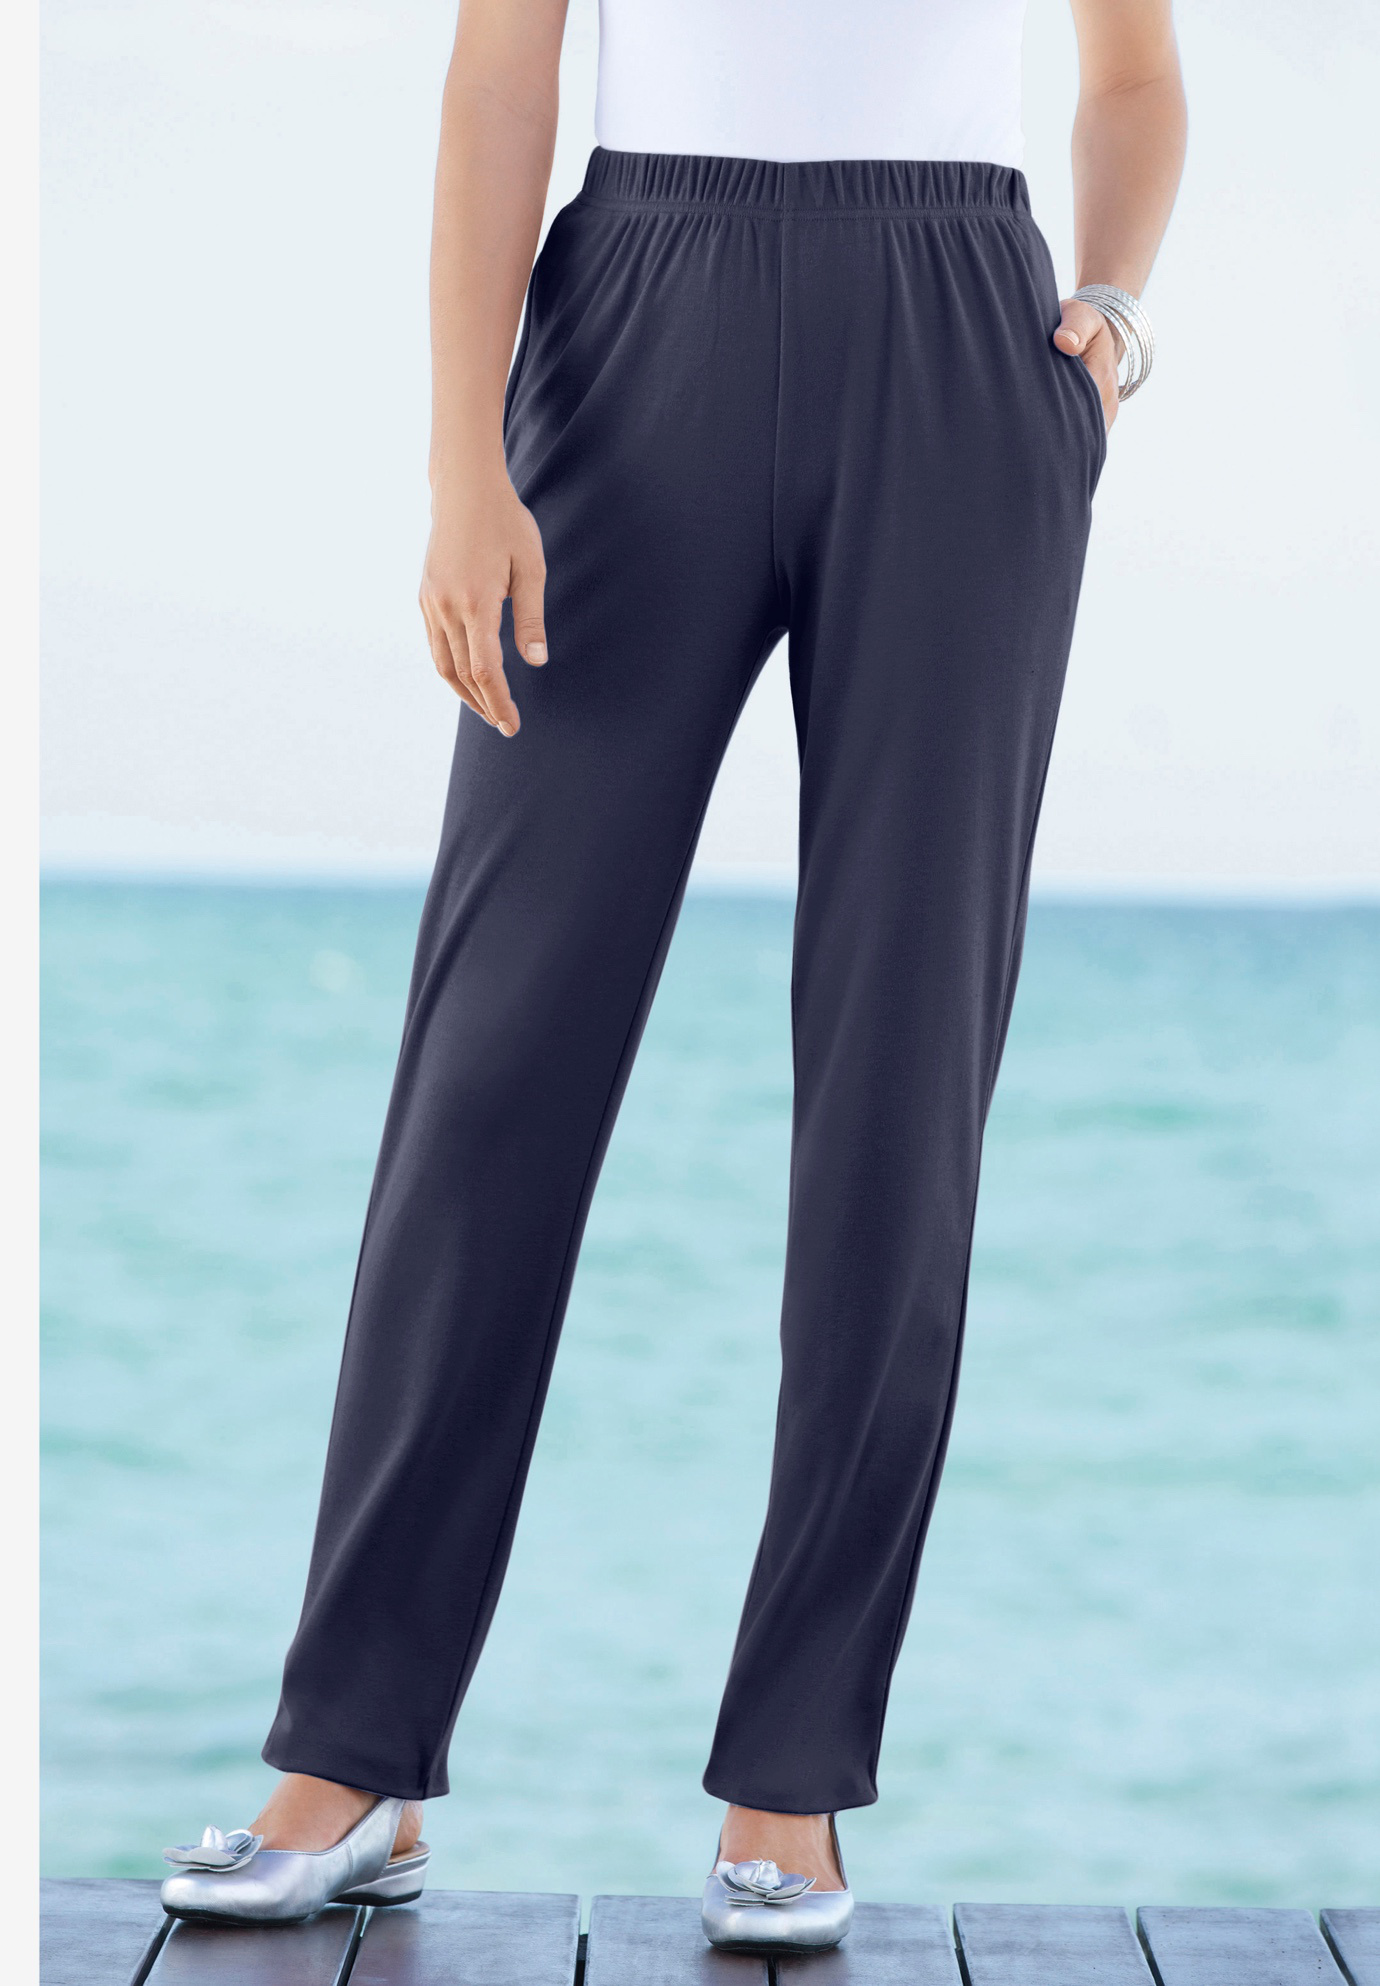 ellos Women's Plus Size Knit Capri Leggings - 26/28, Black